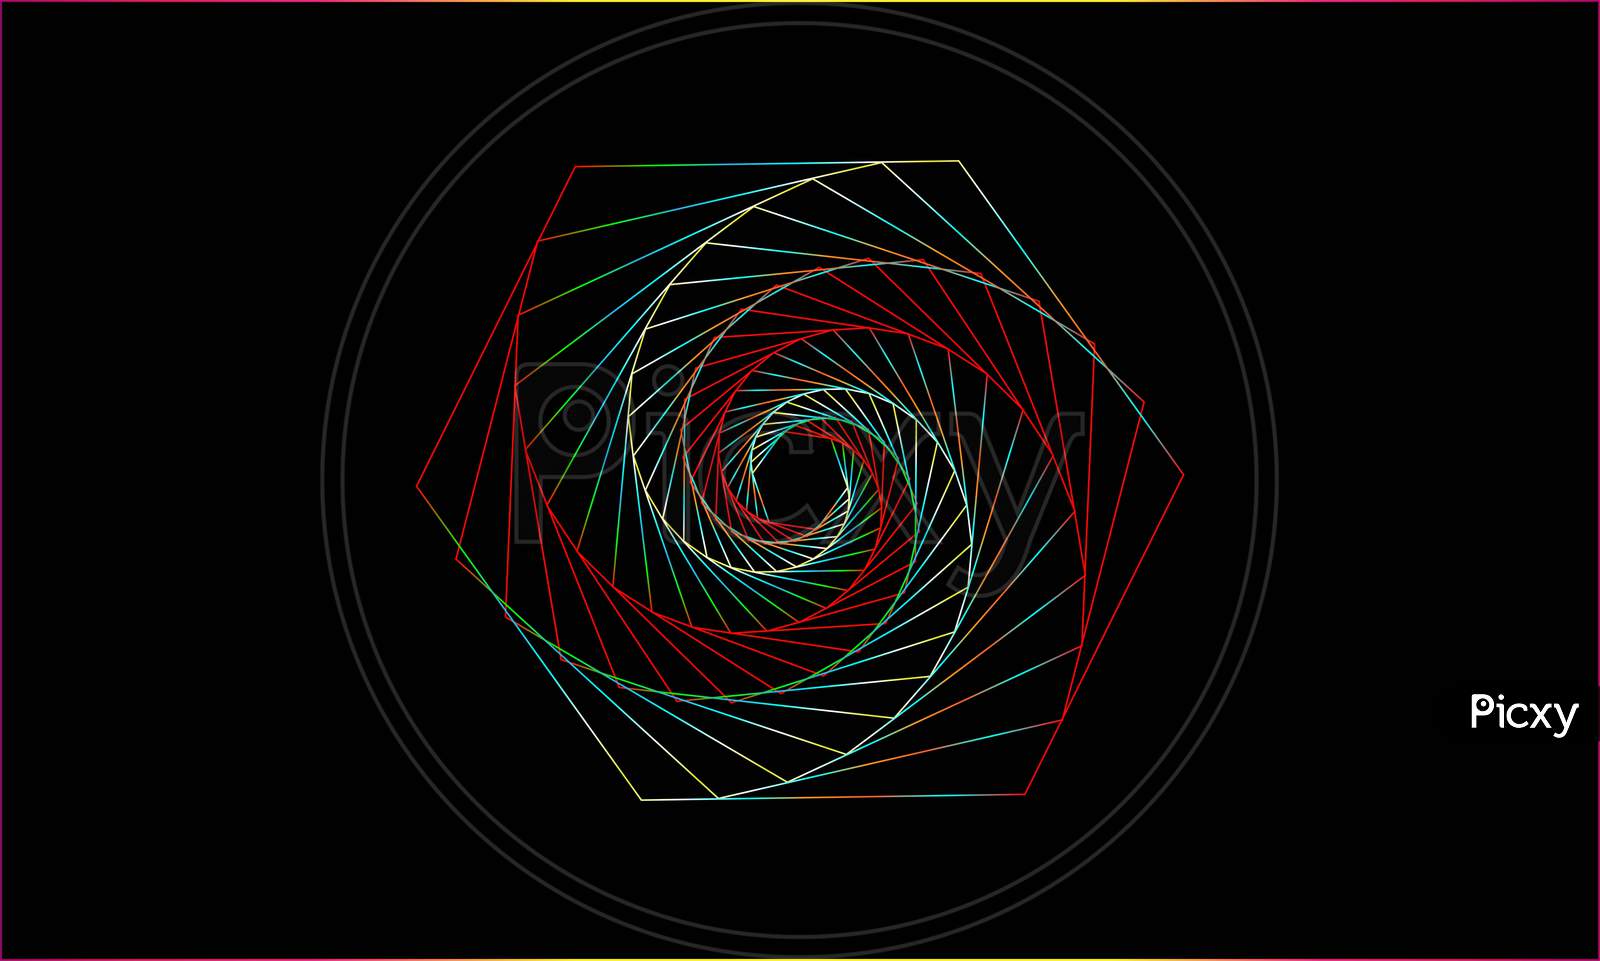 spiral multicolor Art & Illustration